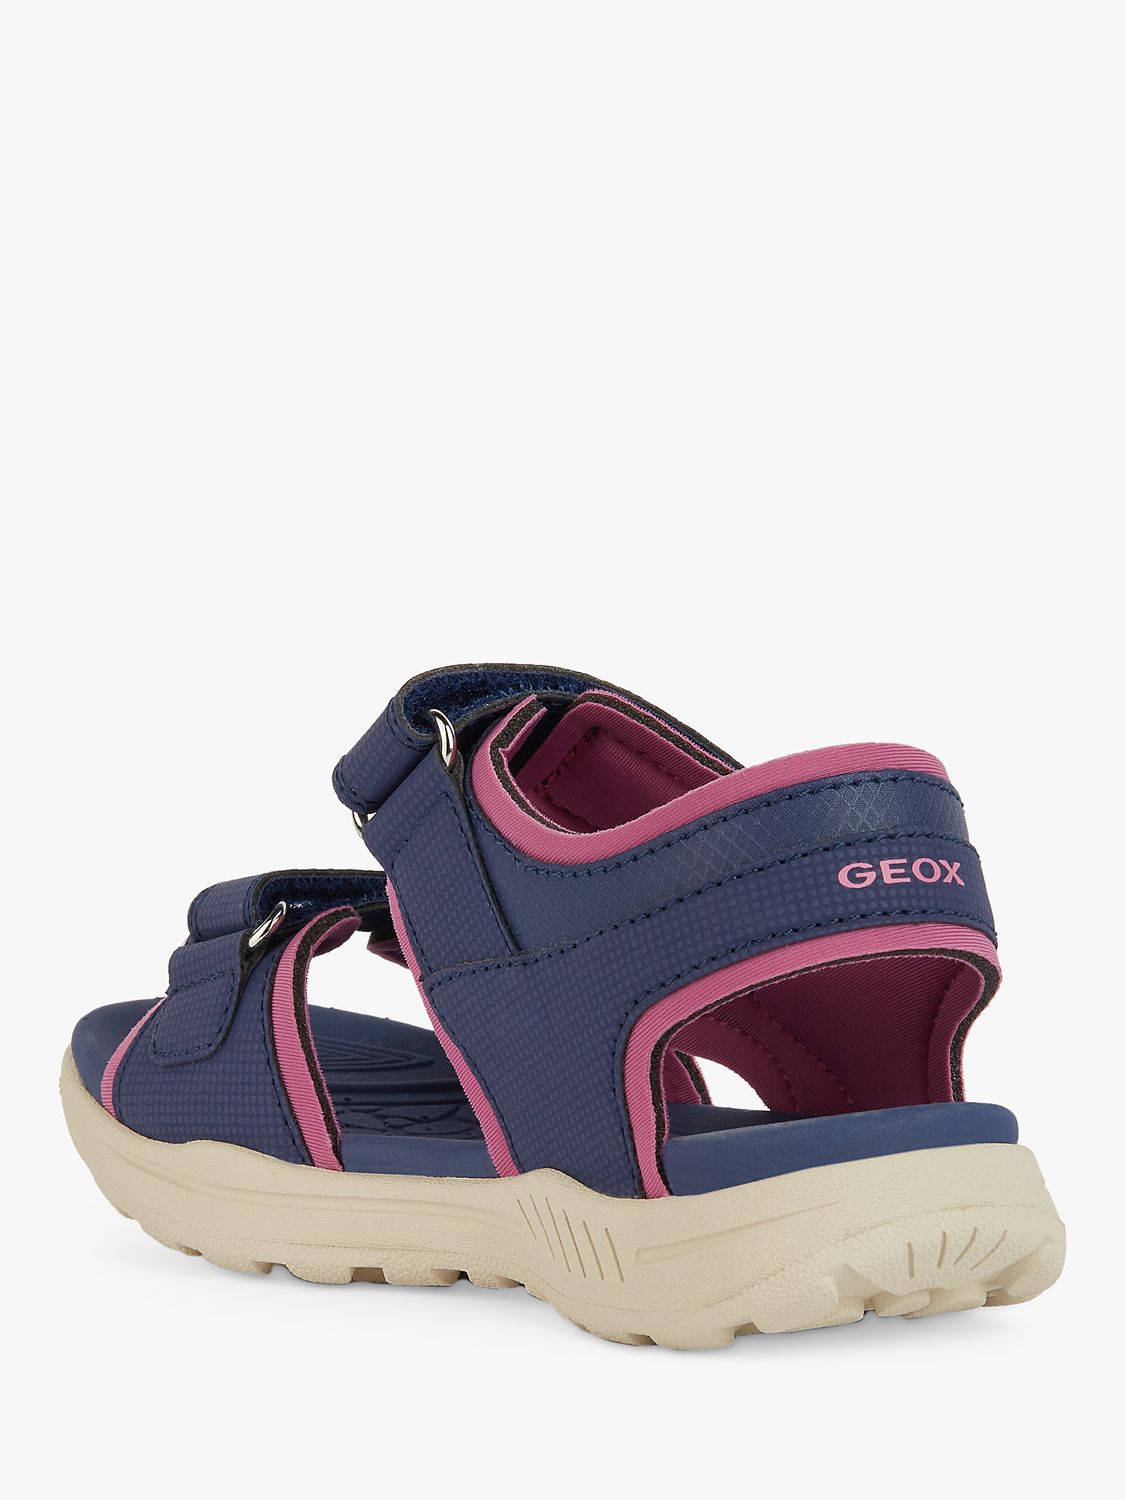 Geox Kids' Vaniett Sandals, Navy/Fuchsia, 30